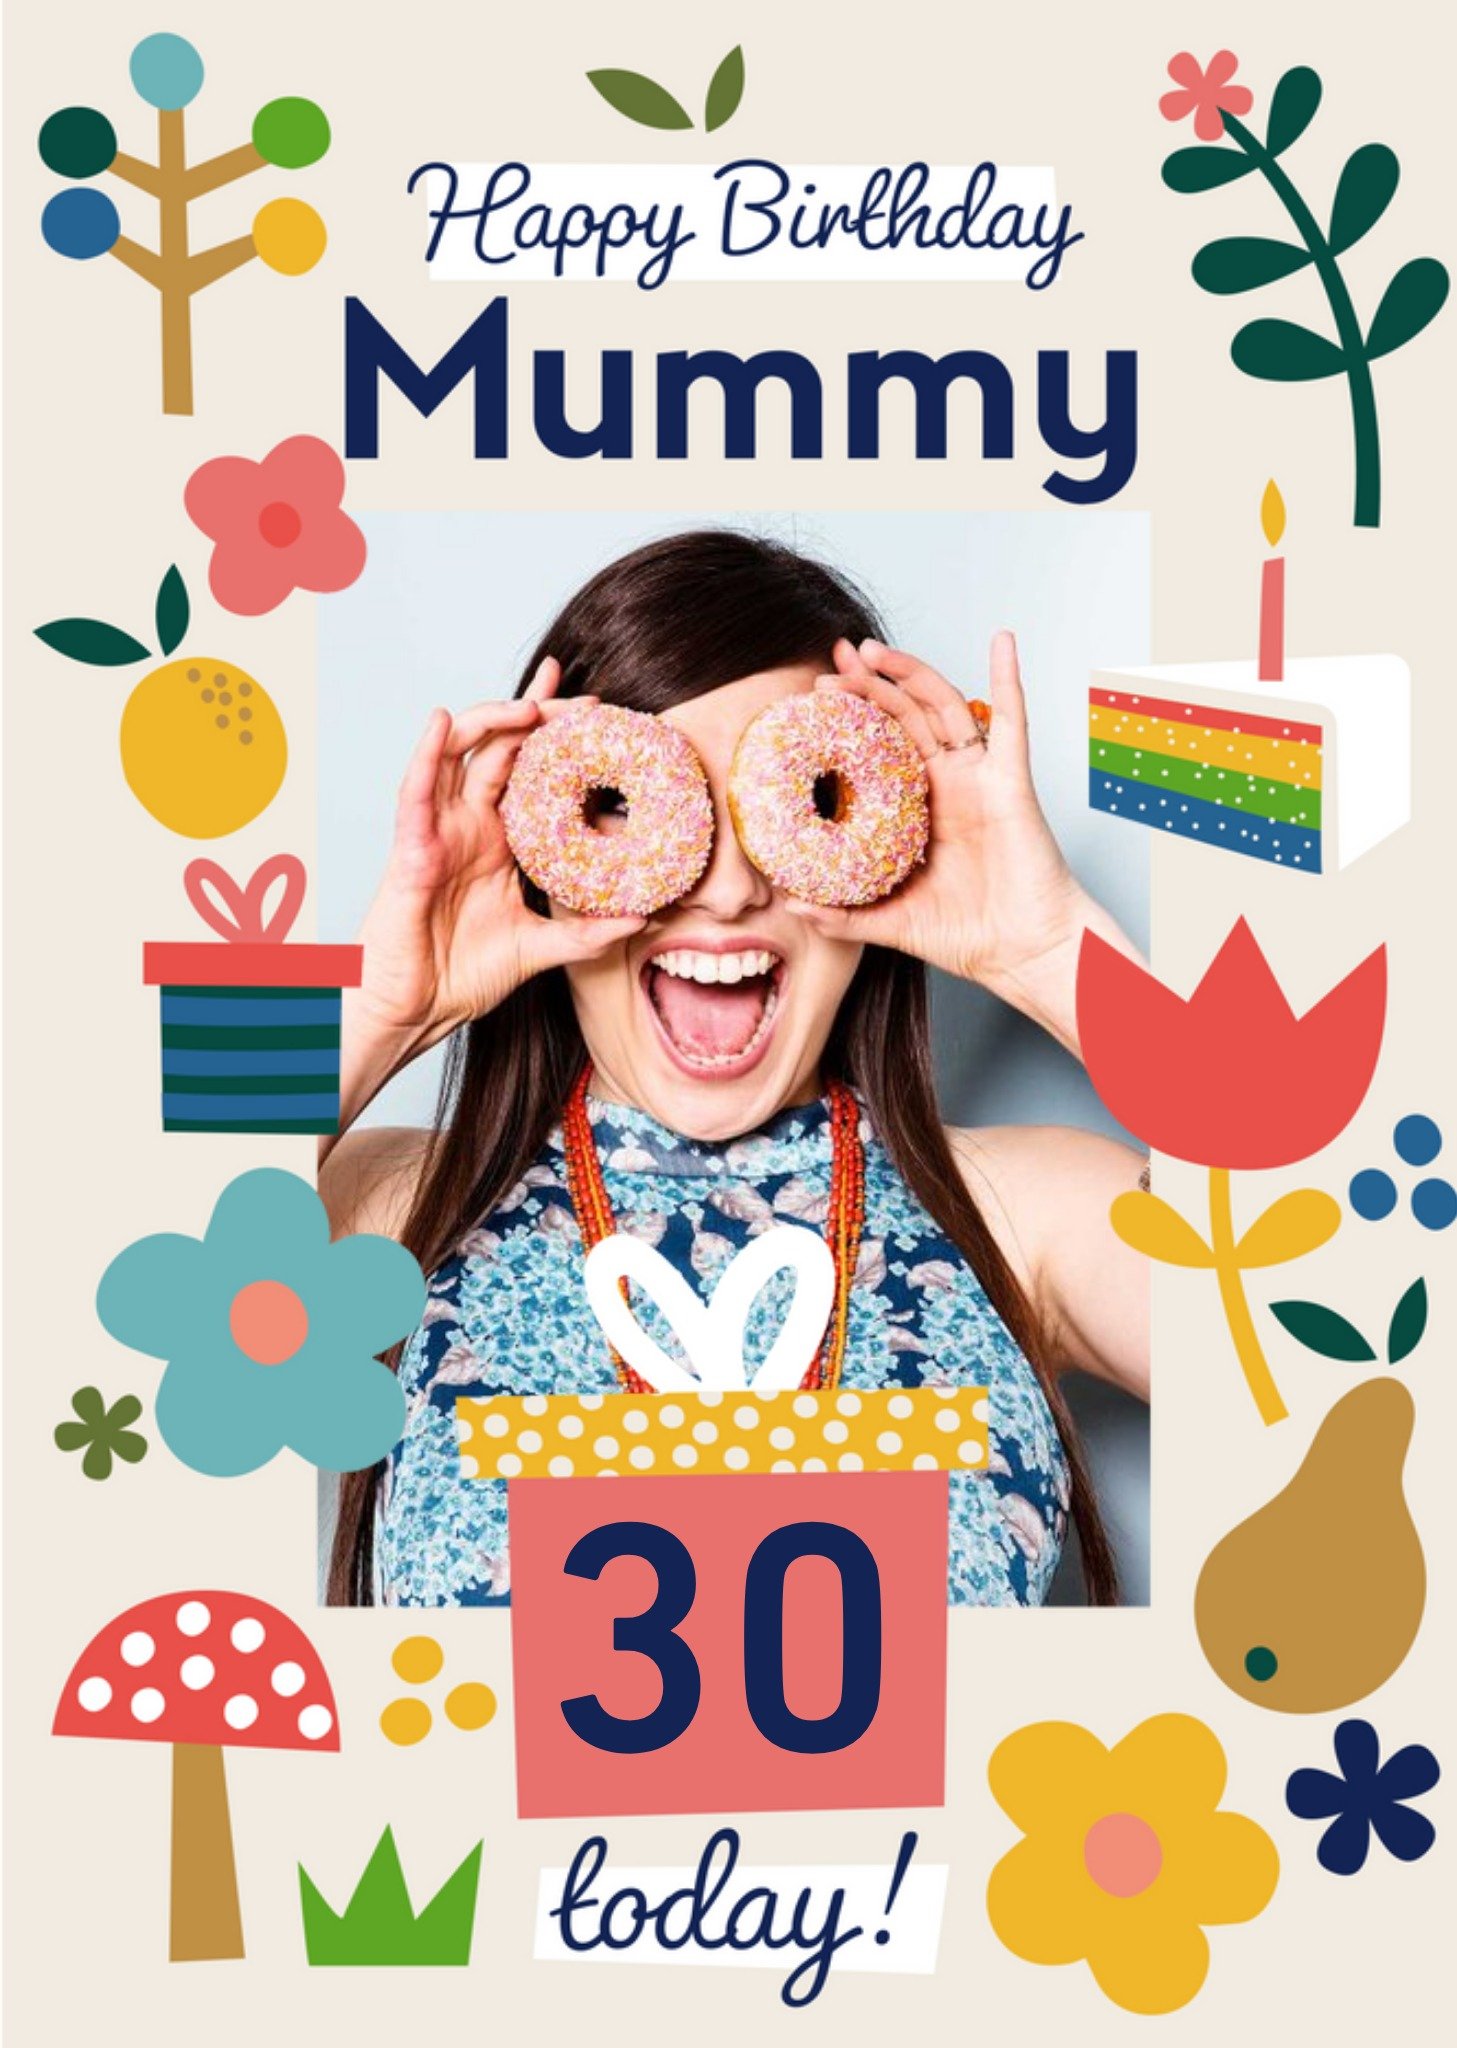 Moonpig Vibrant Spot Illustrations Including Cake And Presents Mummy's Photo Upload Birthday Card Ec